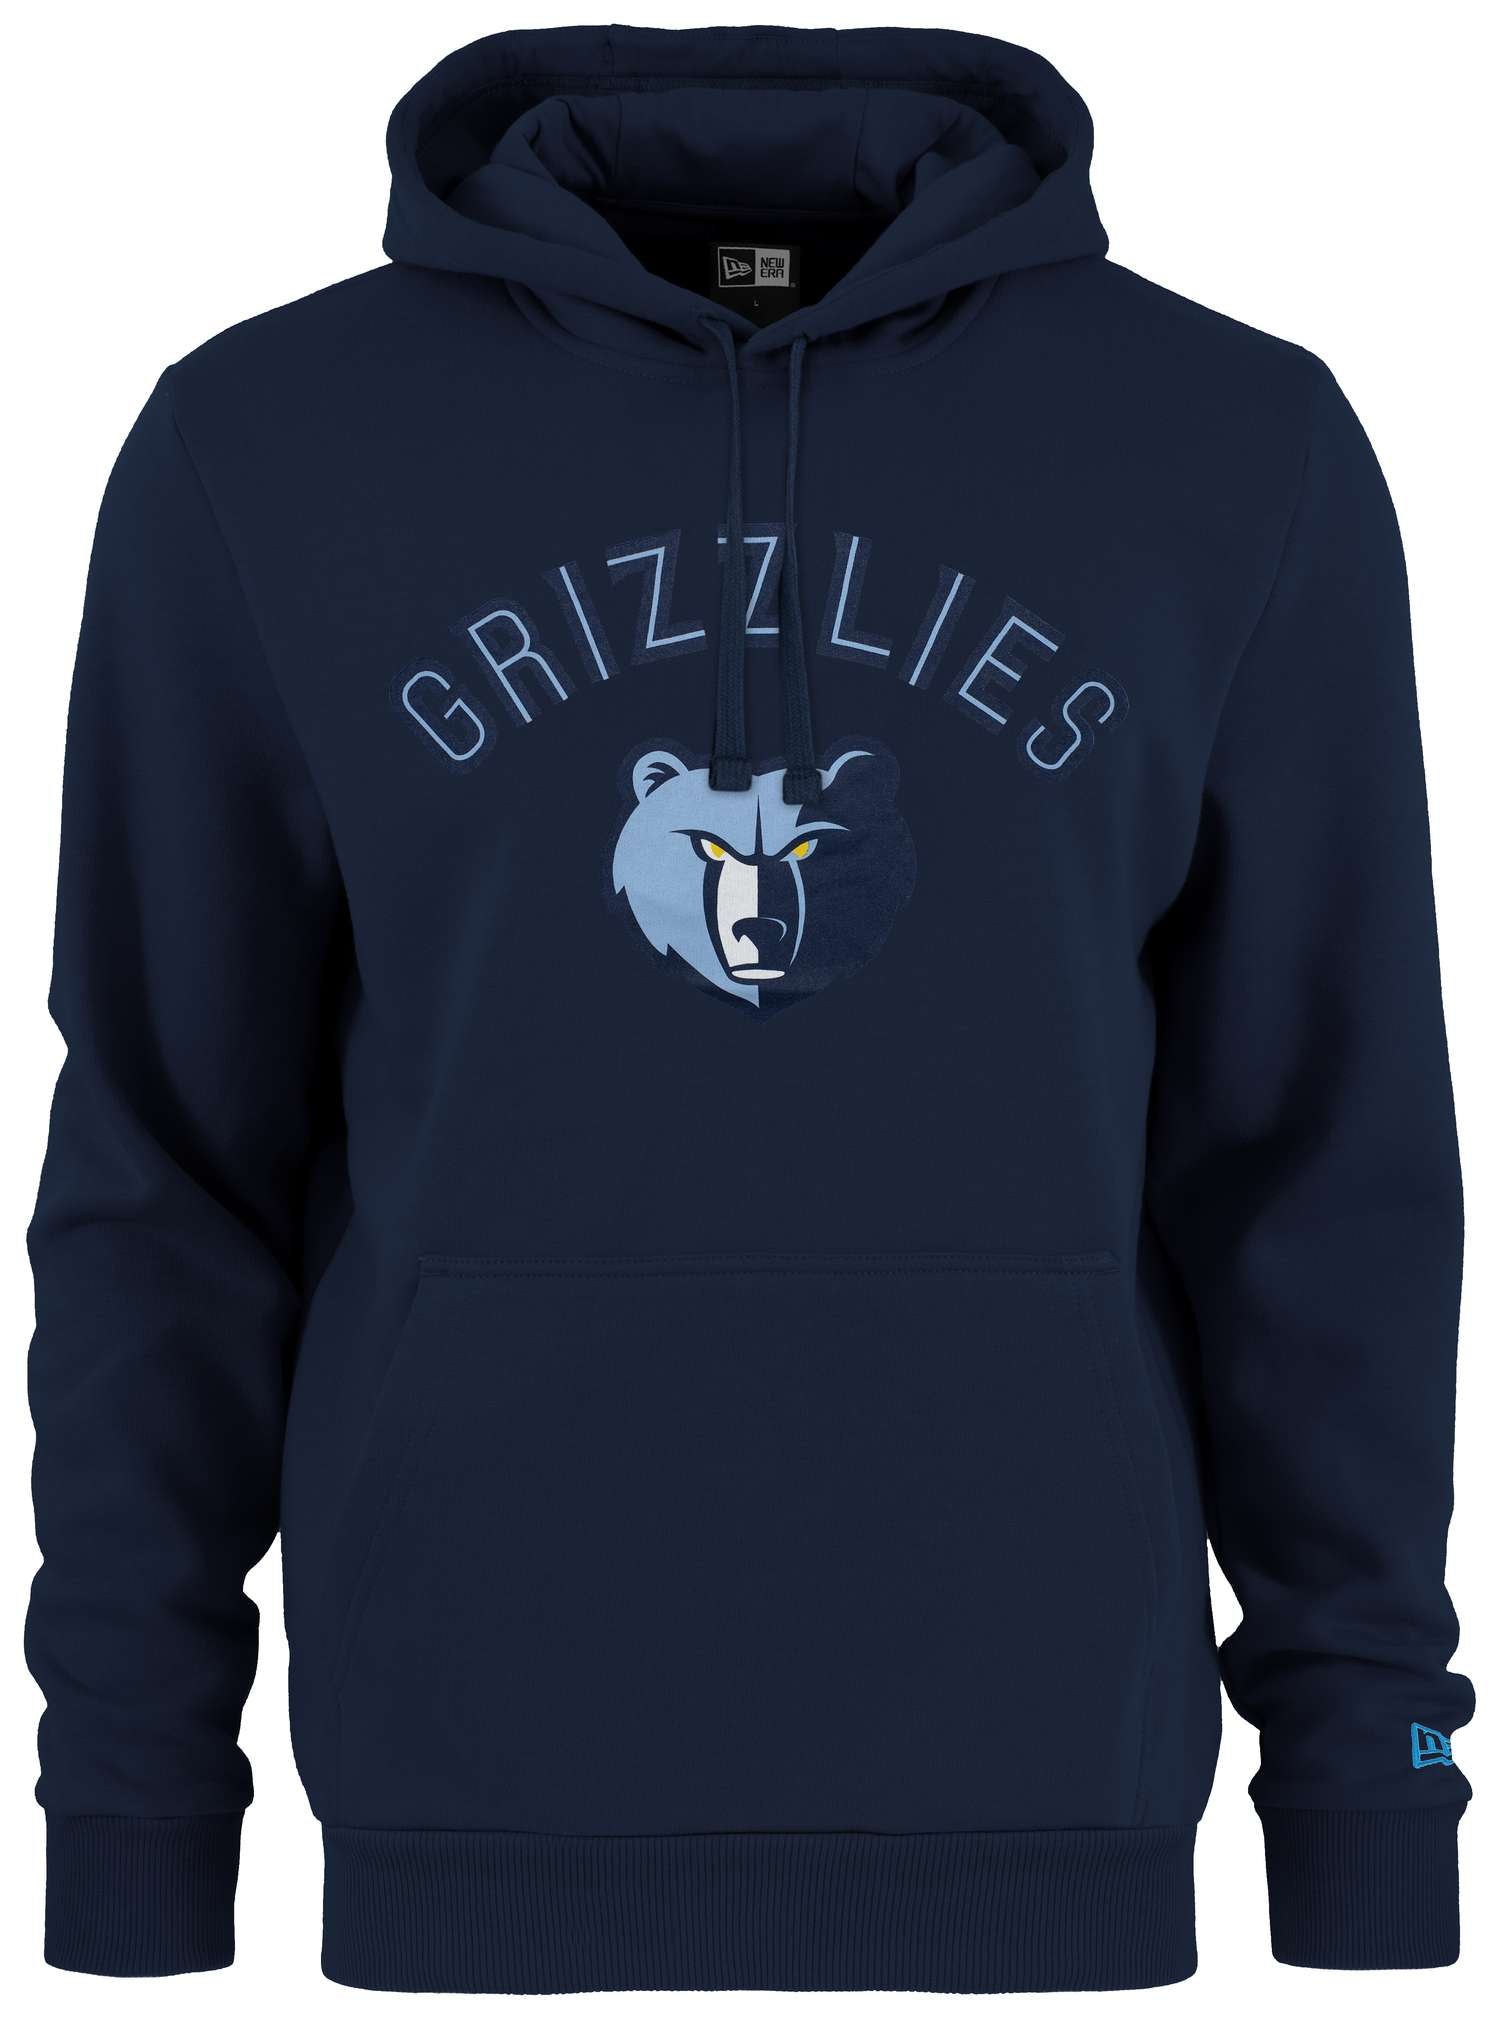 New Era - NBA Memphis Grizzlies Team Logo Hoodie - Blau